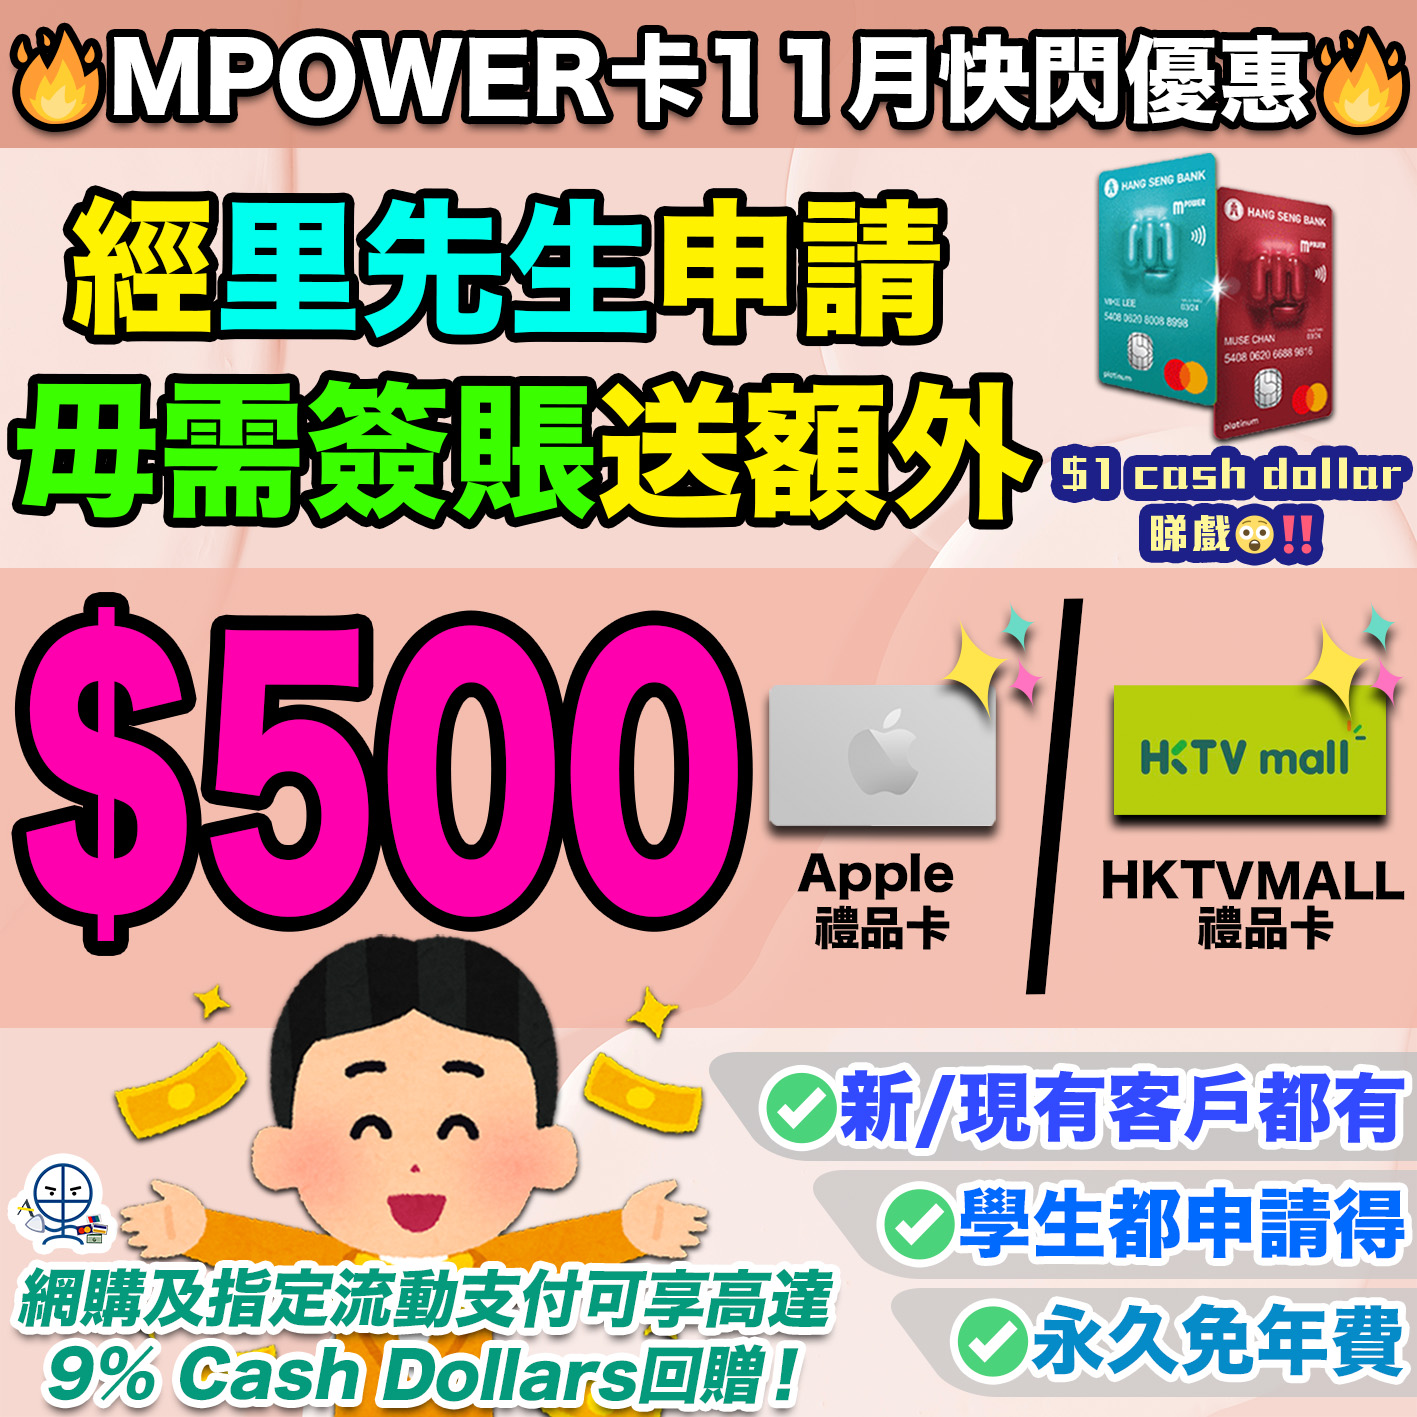 【7-Eleven 恒生信用卡優惠】憑卡於7-Eleven消費滿指定金額 即可賺高達30 Cash dollars/6,000 yuu積分！